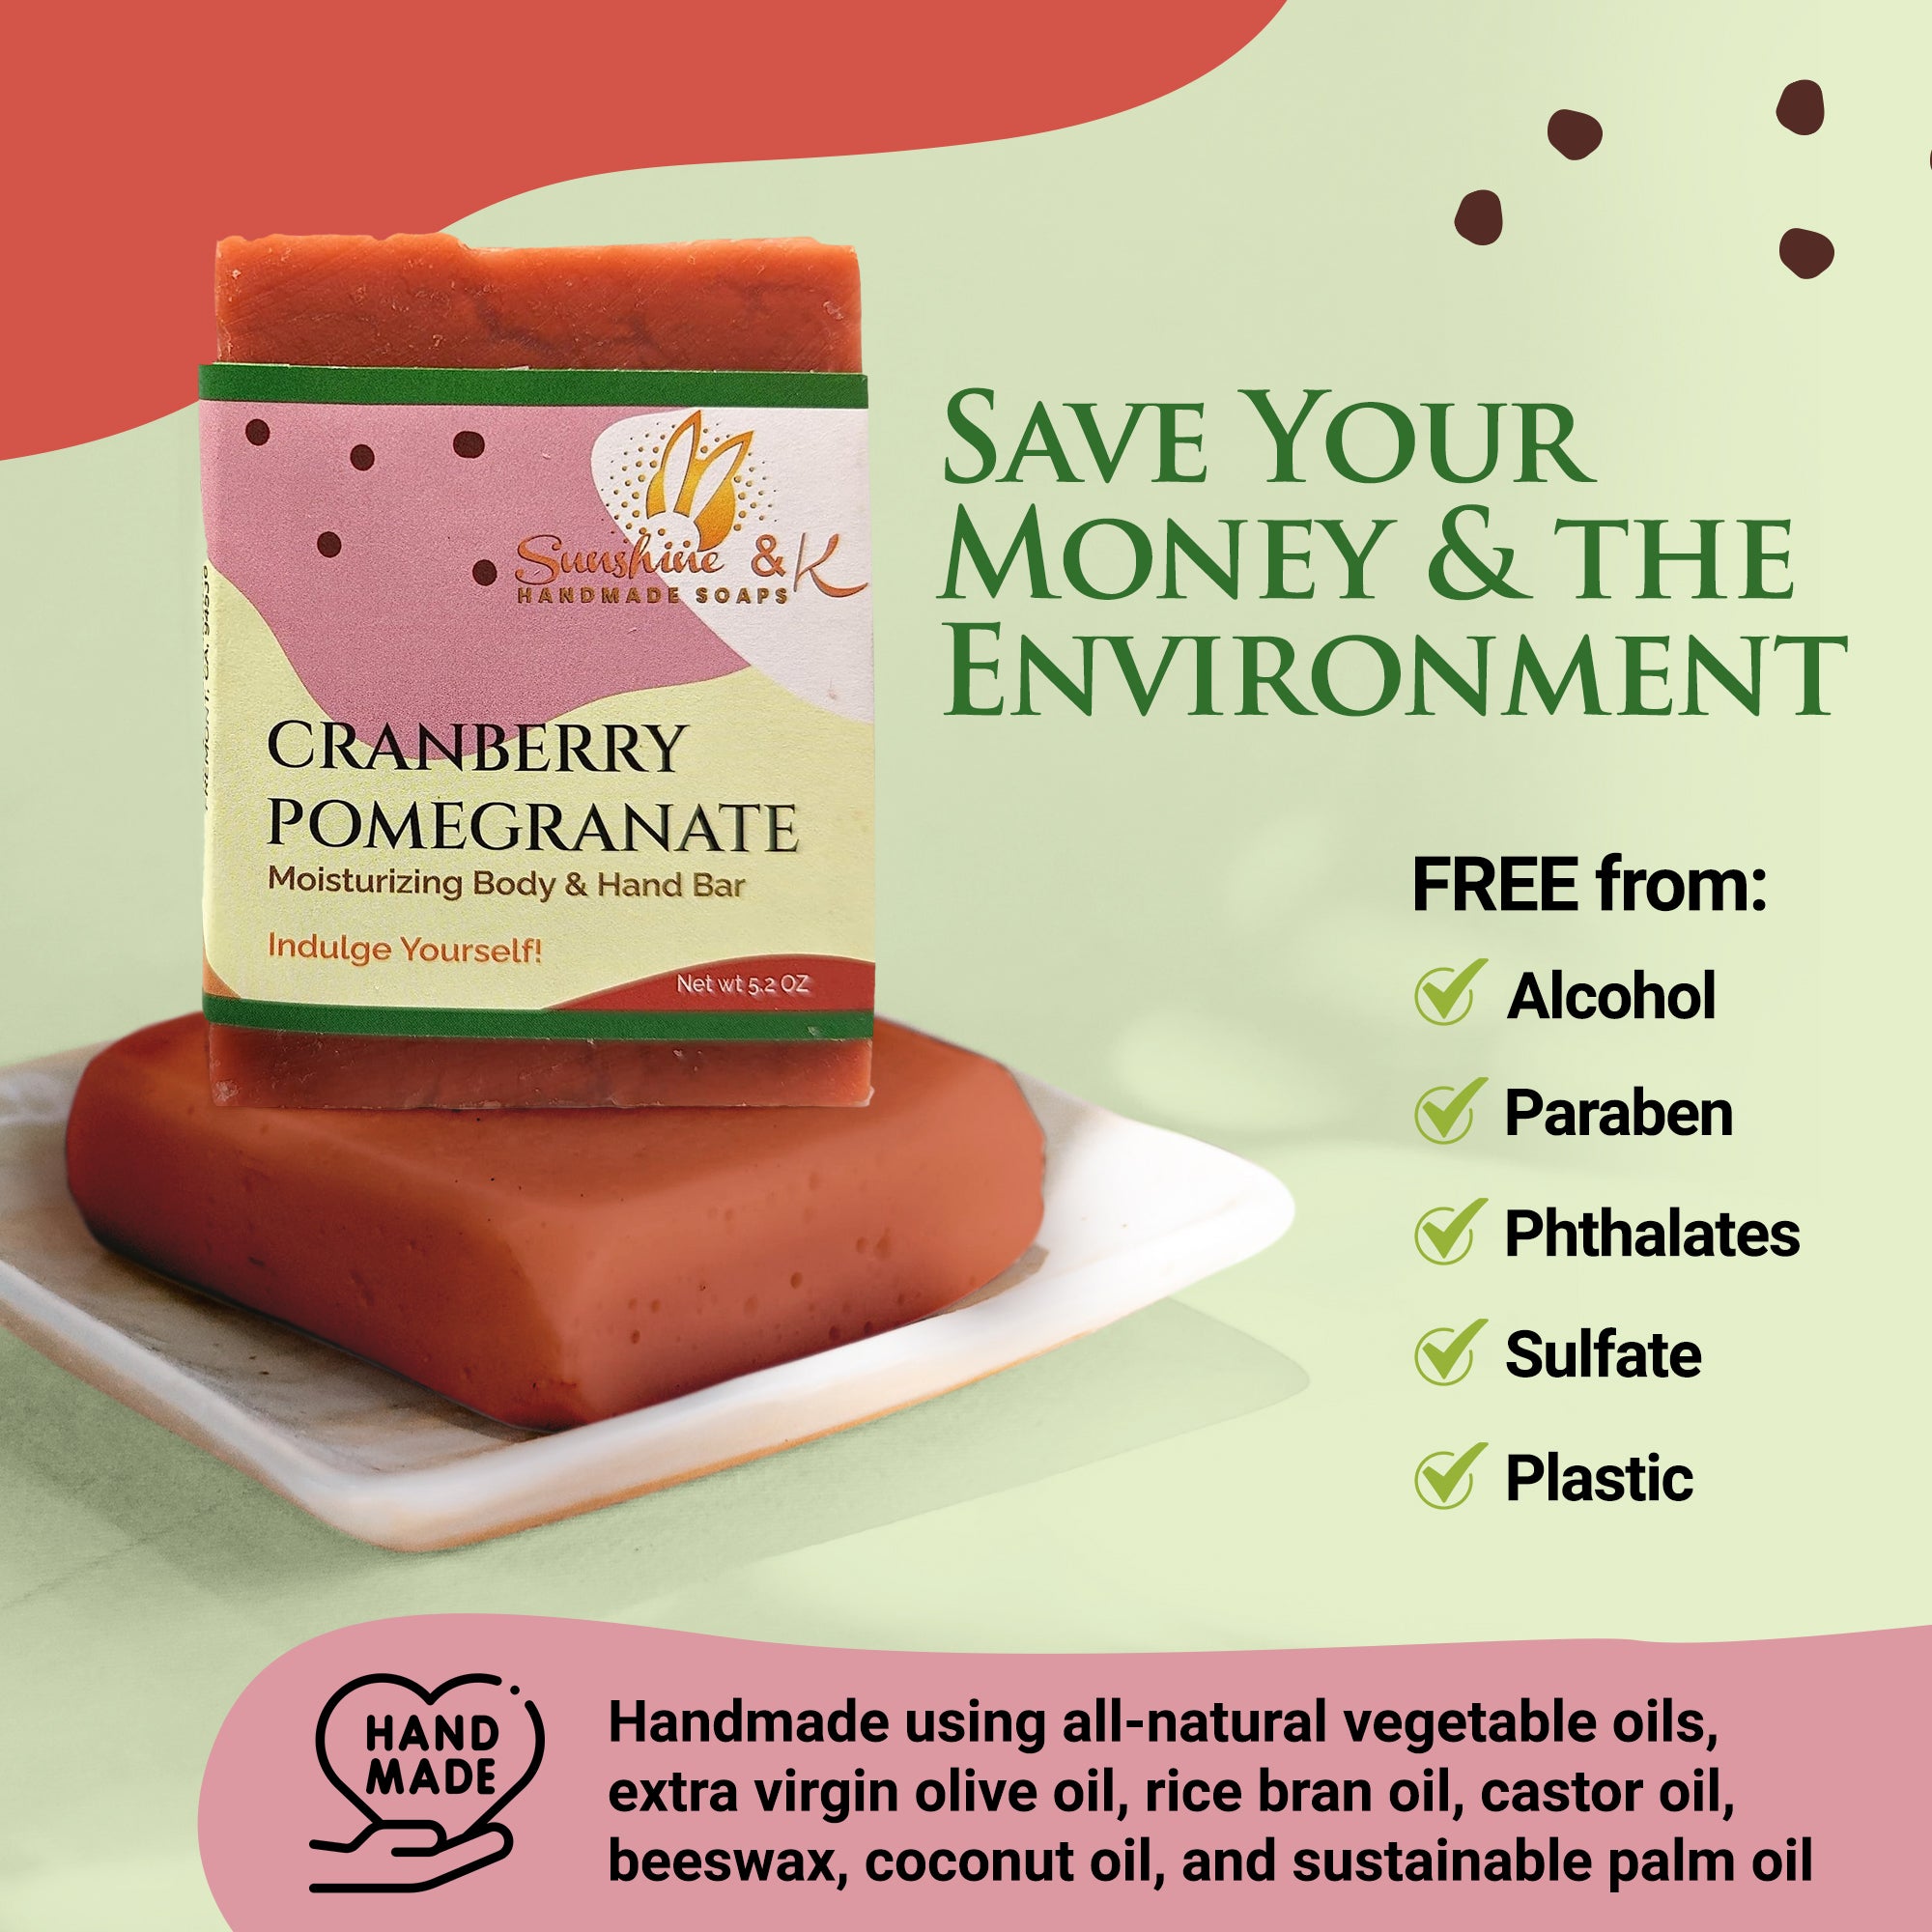 Cranberry Pomegranate Bar Soap - Body & Face Bar Soap, Handmade Bath Soap, Moisturizing Bar Soap With Beeswax, Rice Bran Oil, & Natural Base Oils, Natural Soap Bars, 5 oz, Sunshine & K Handmade Soaps - sunshine-handmade-soaps